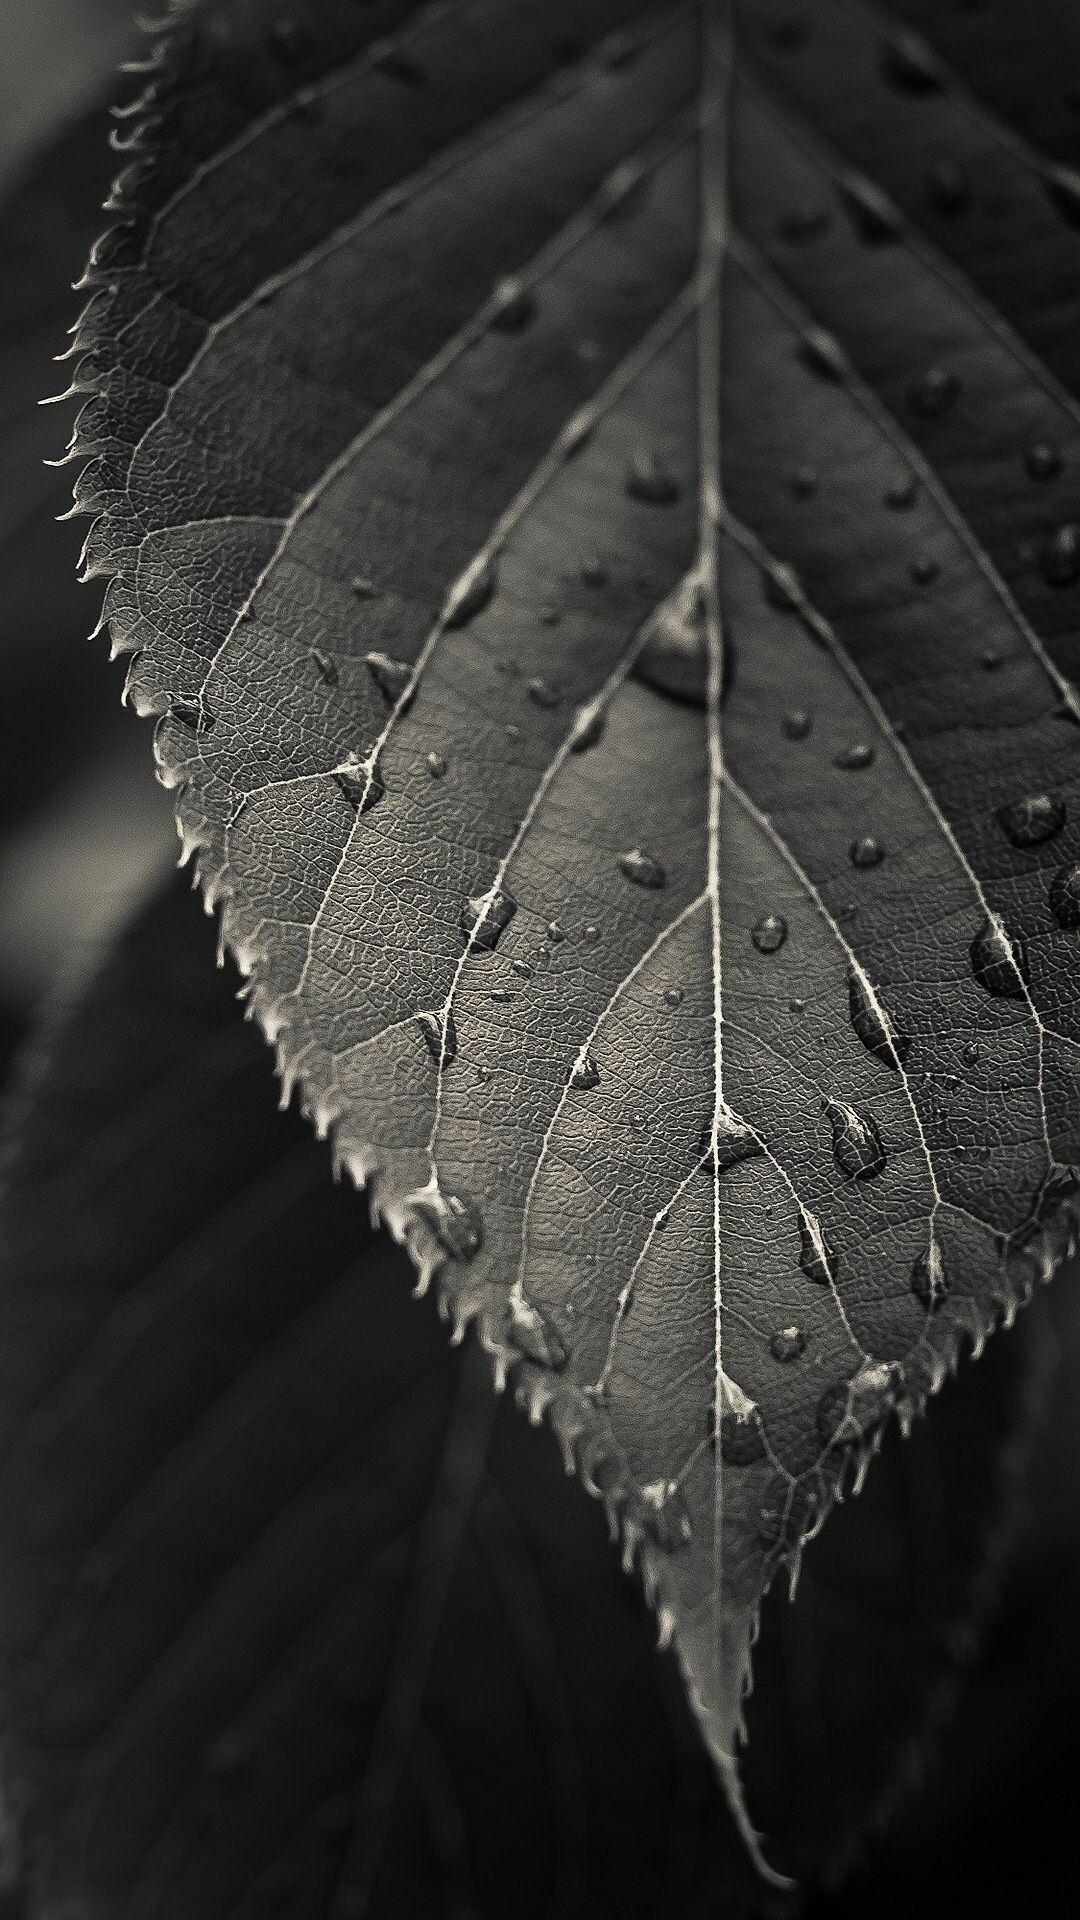 Leaves: Moisture evaporating from plants, Lamina, Monochrome. 1080x1920 Full HD Wallpaper.